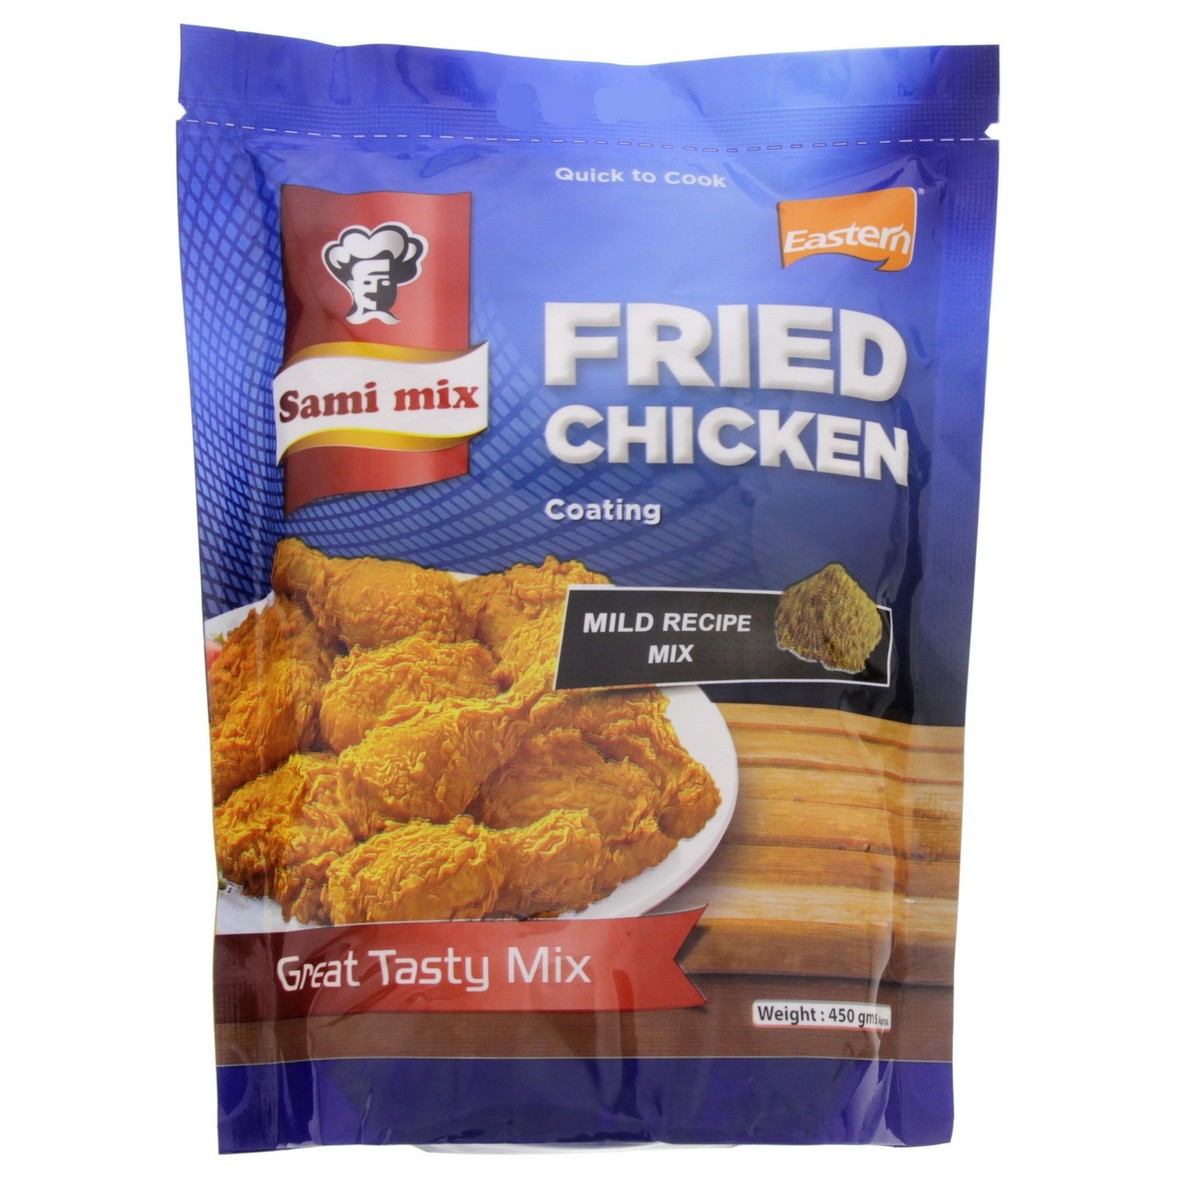 Eastern Fried Chicken Coating Mild Mix 450g